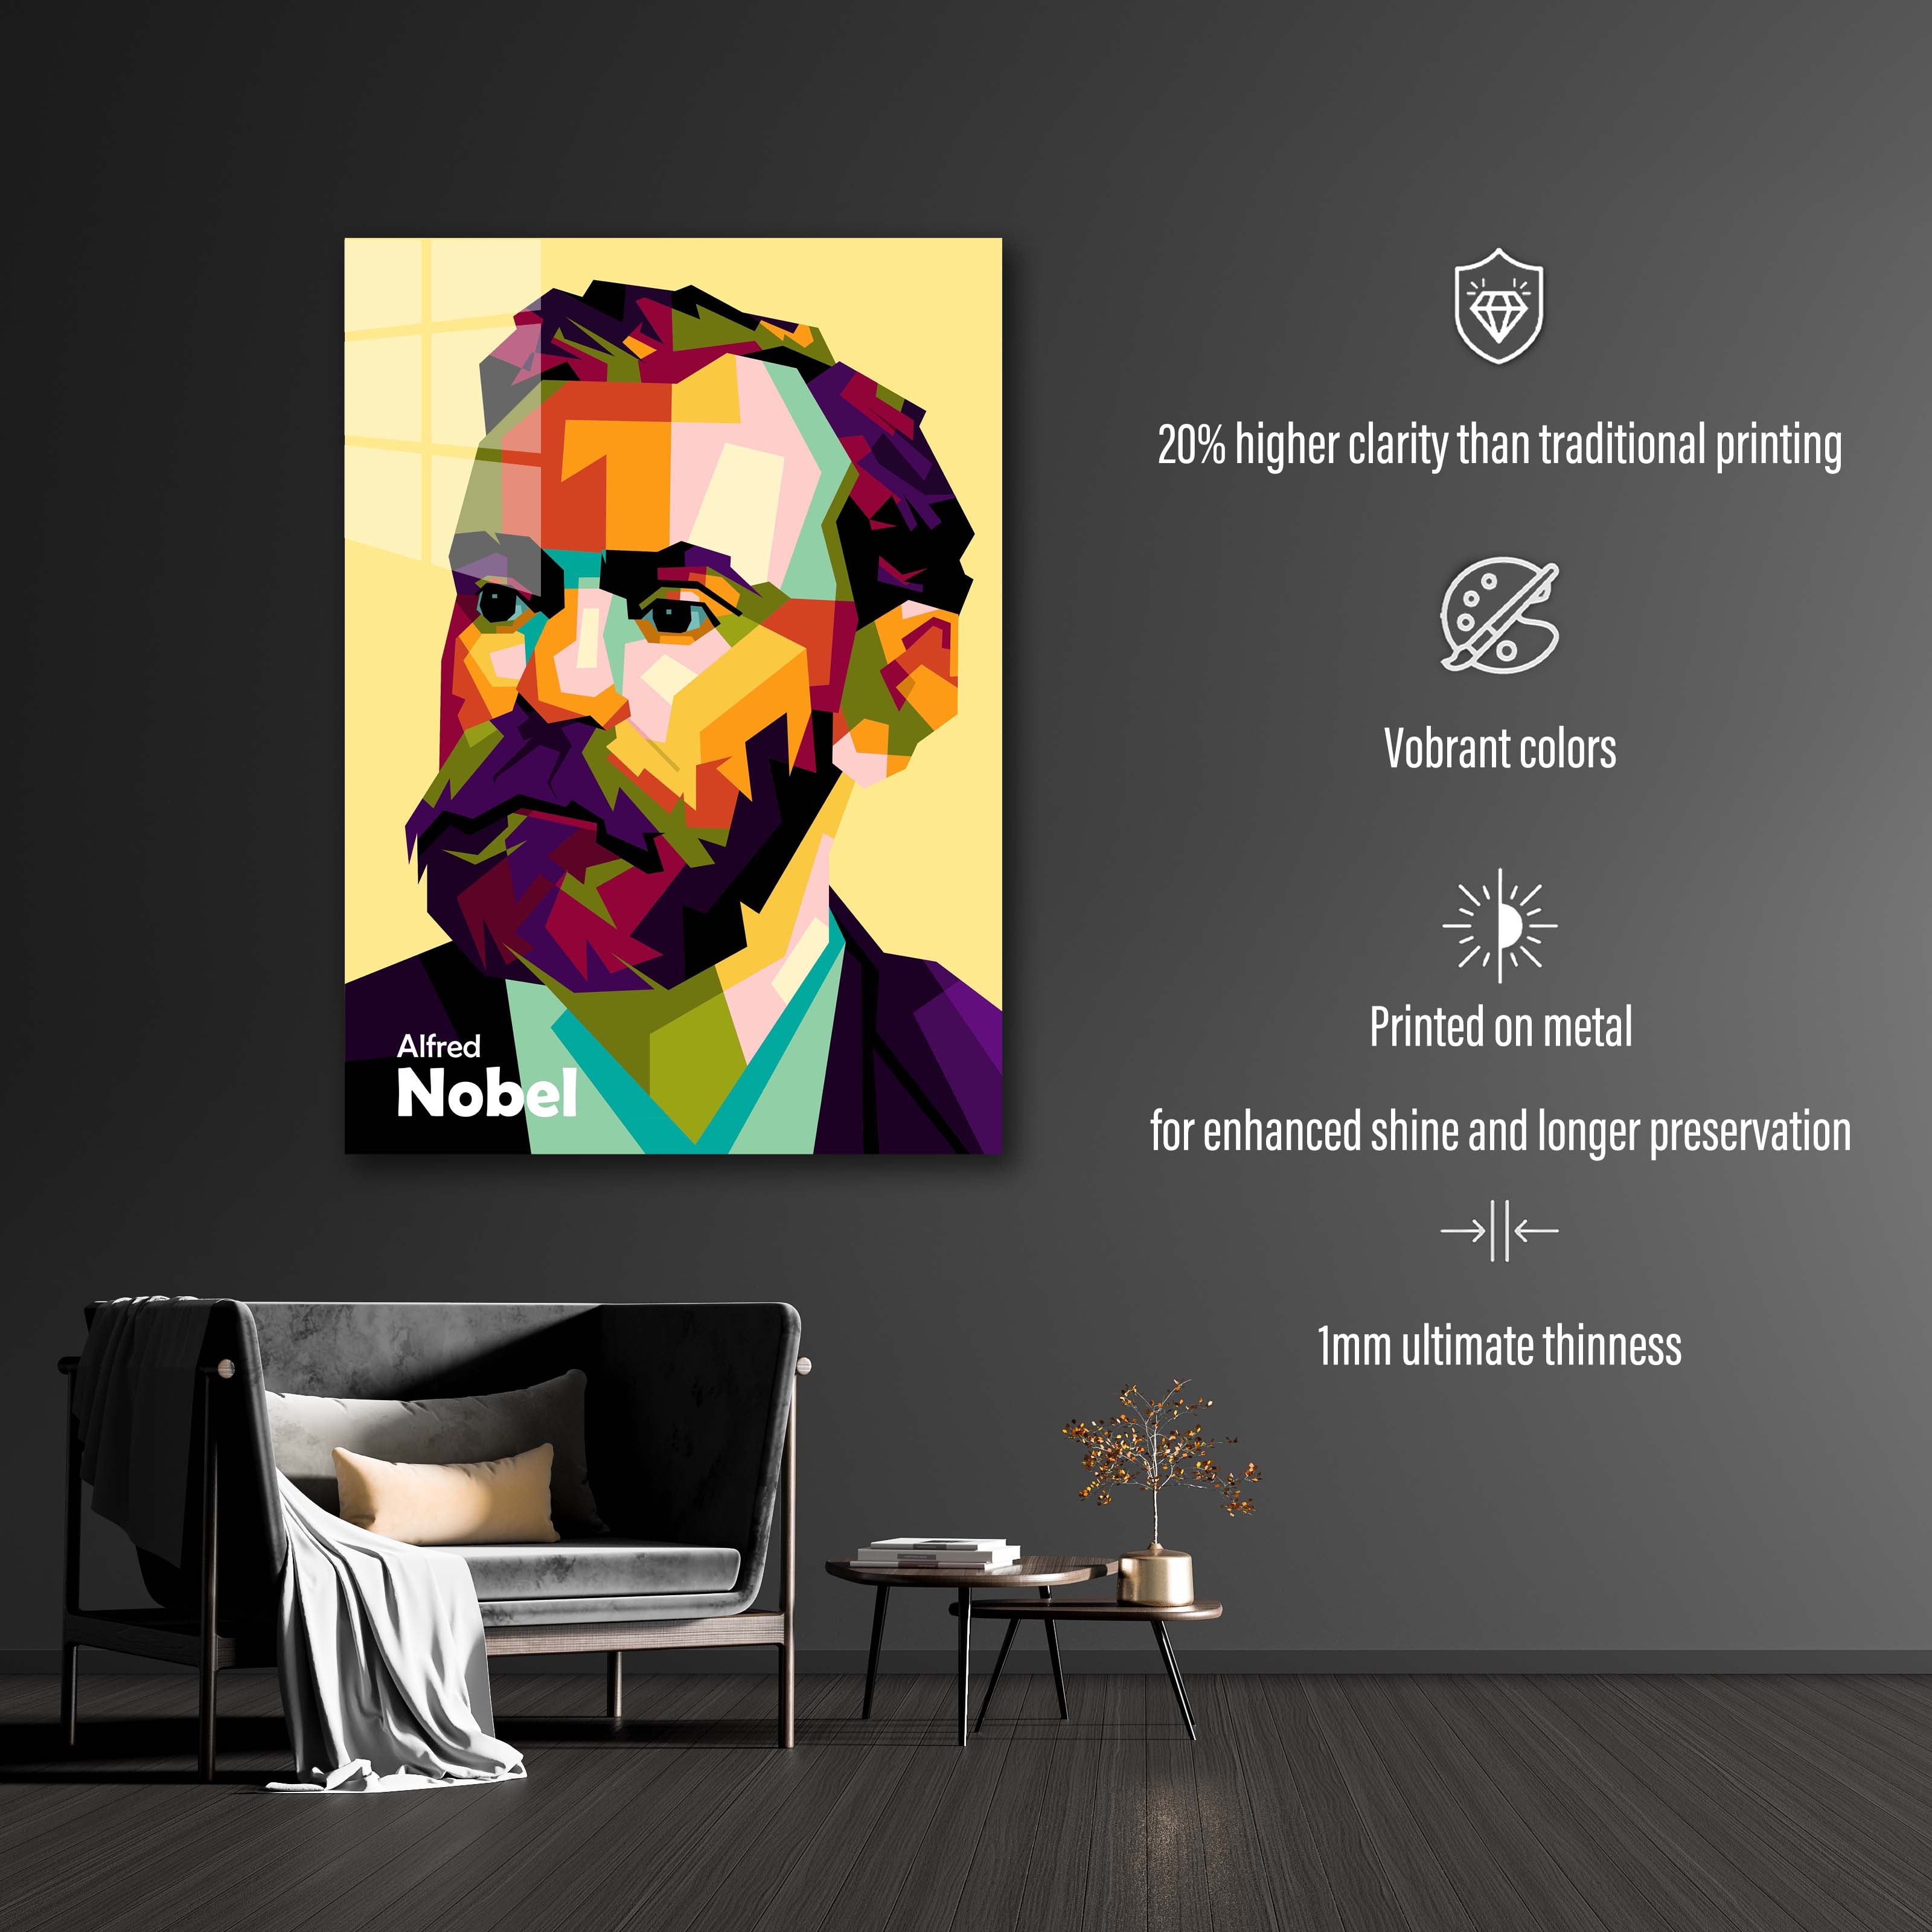 Alfred Nobel in fantastic wpap trending art-designed by @Amirudin kosong enam